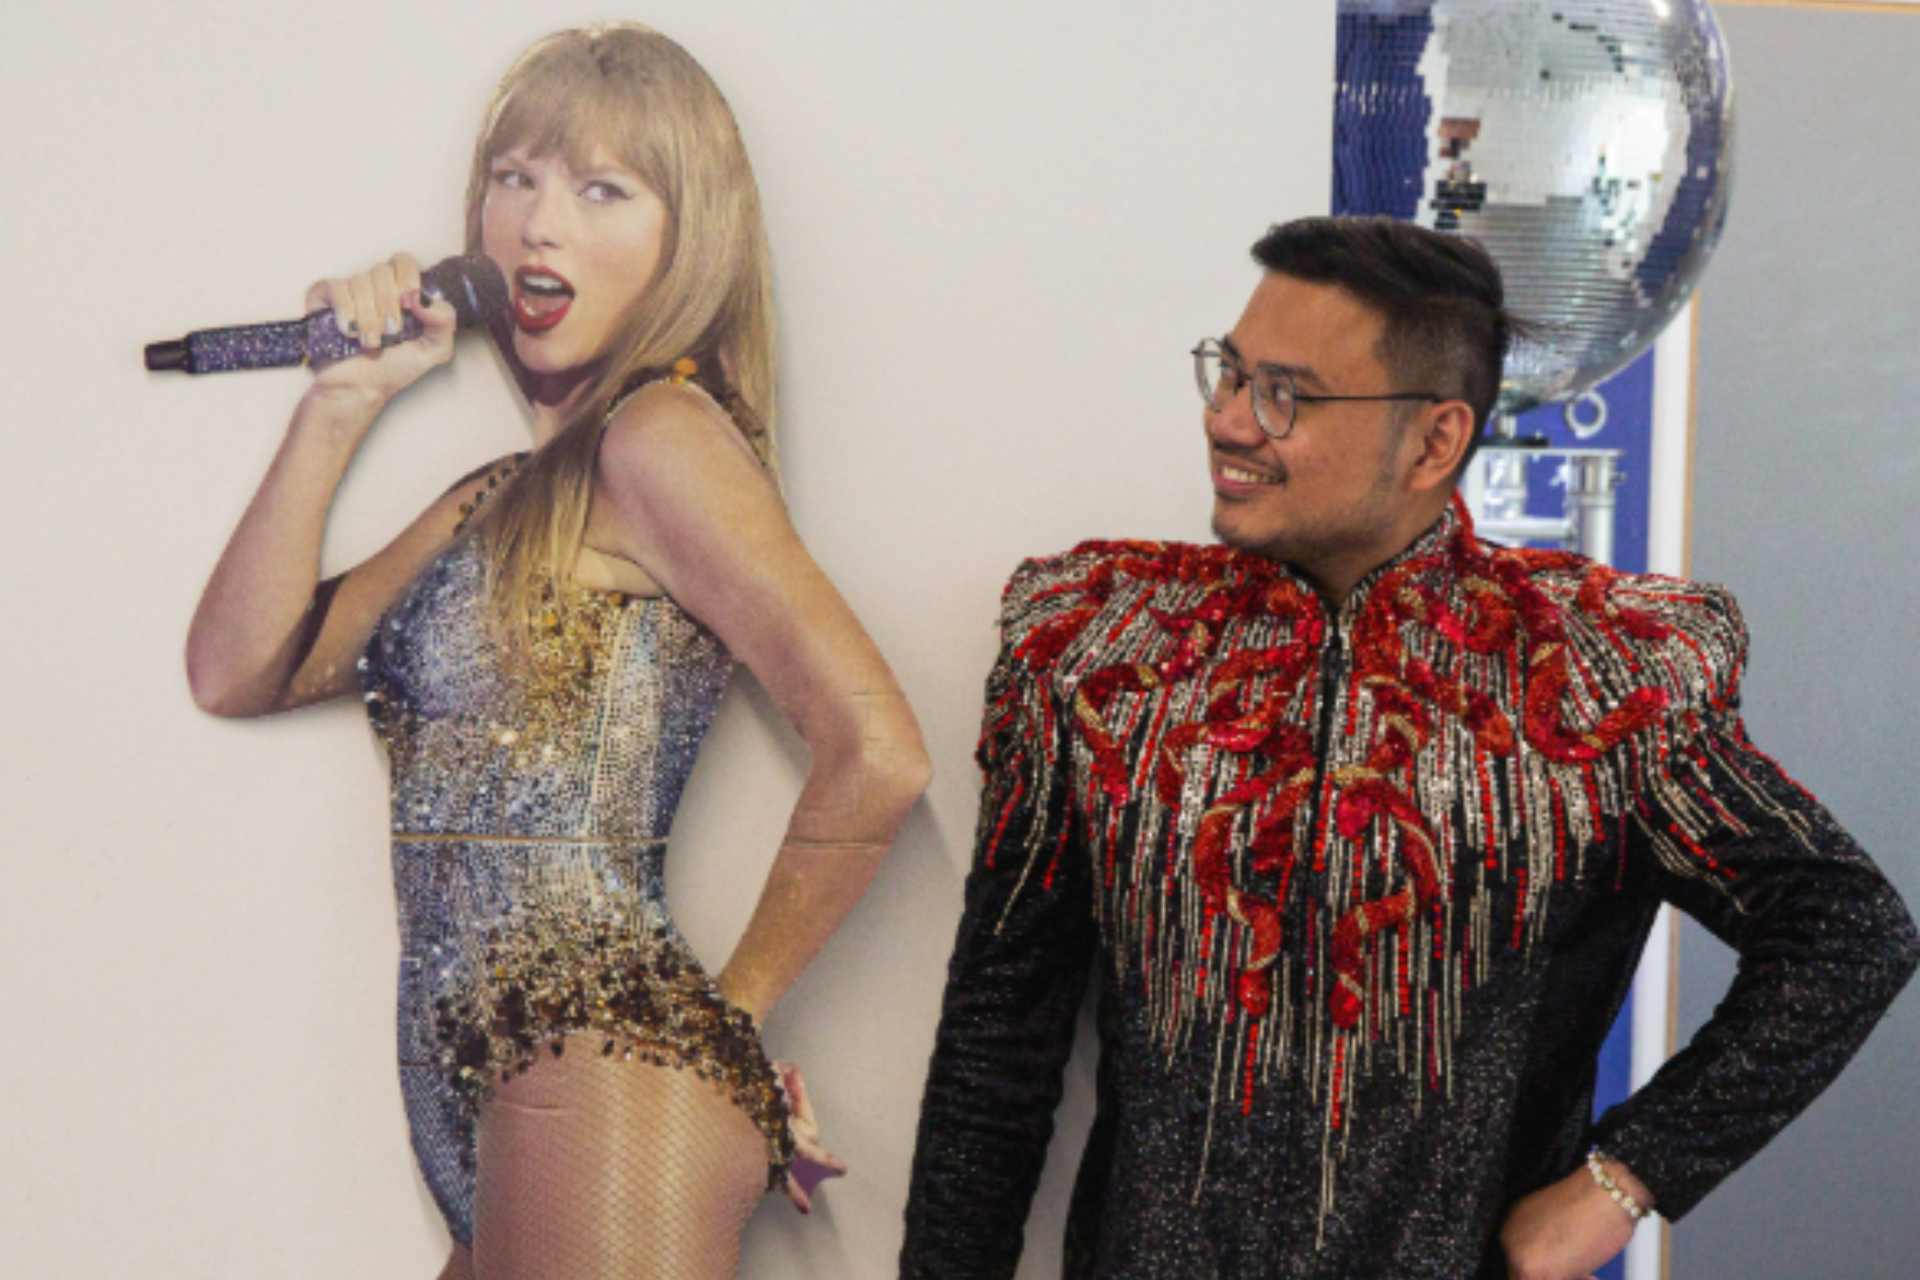 Fan standing next to cardboard cutout of Taylor Swift